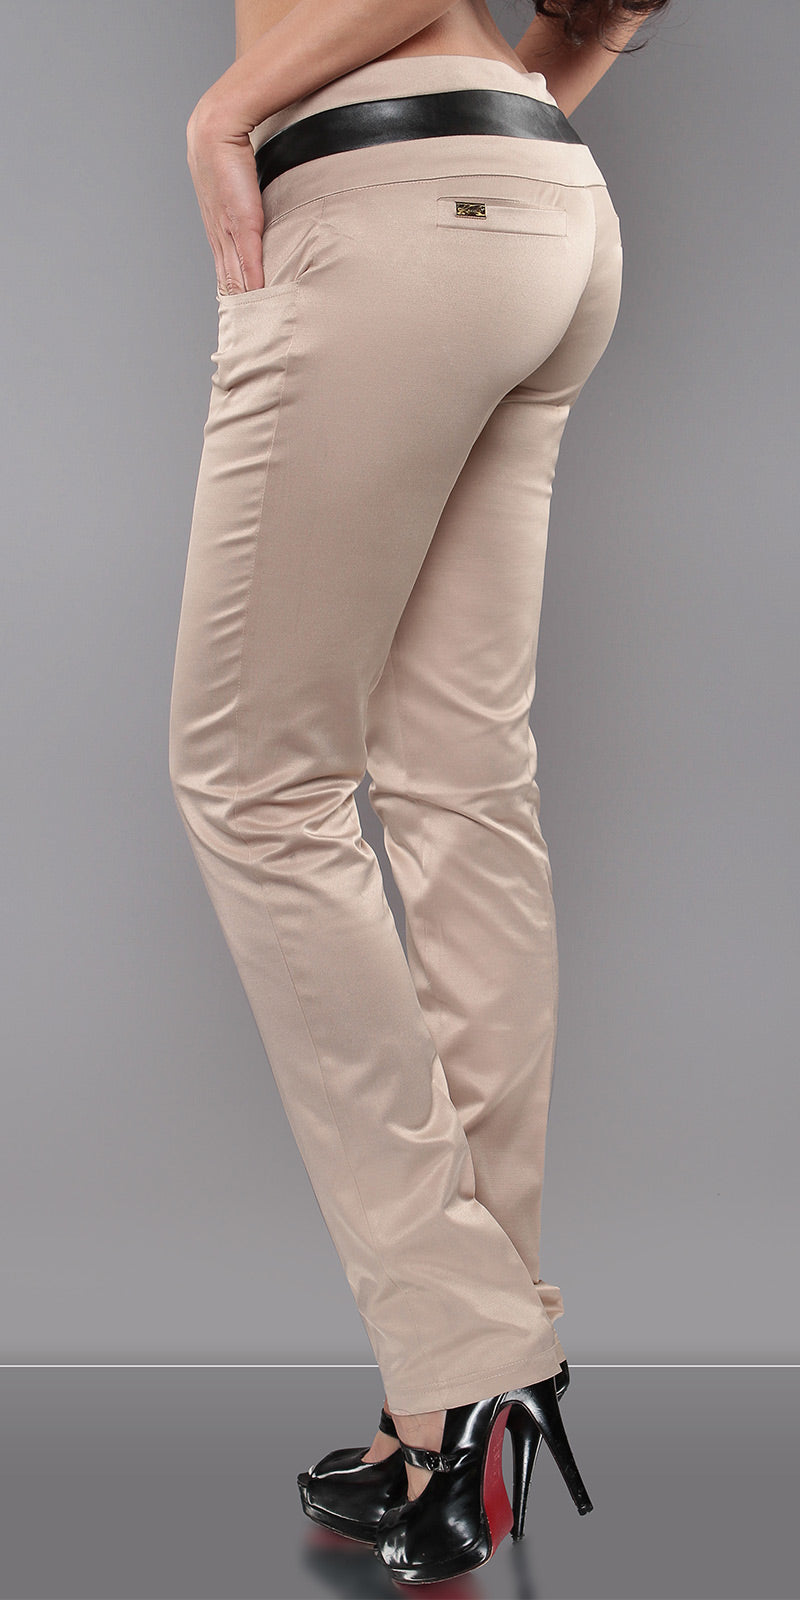 Completo giacca + pantaloni beige 0000ISF-V916 solo taglia XL